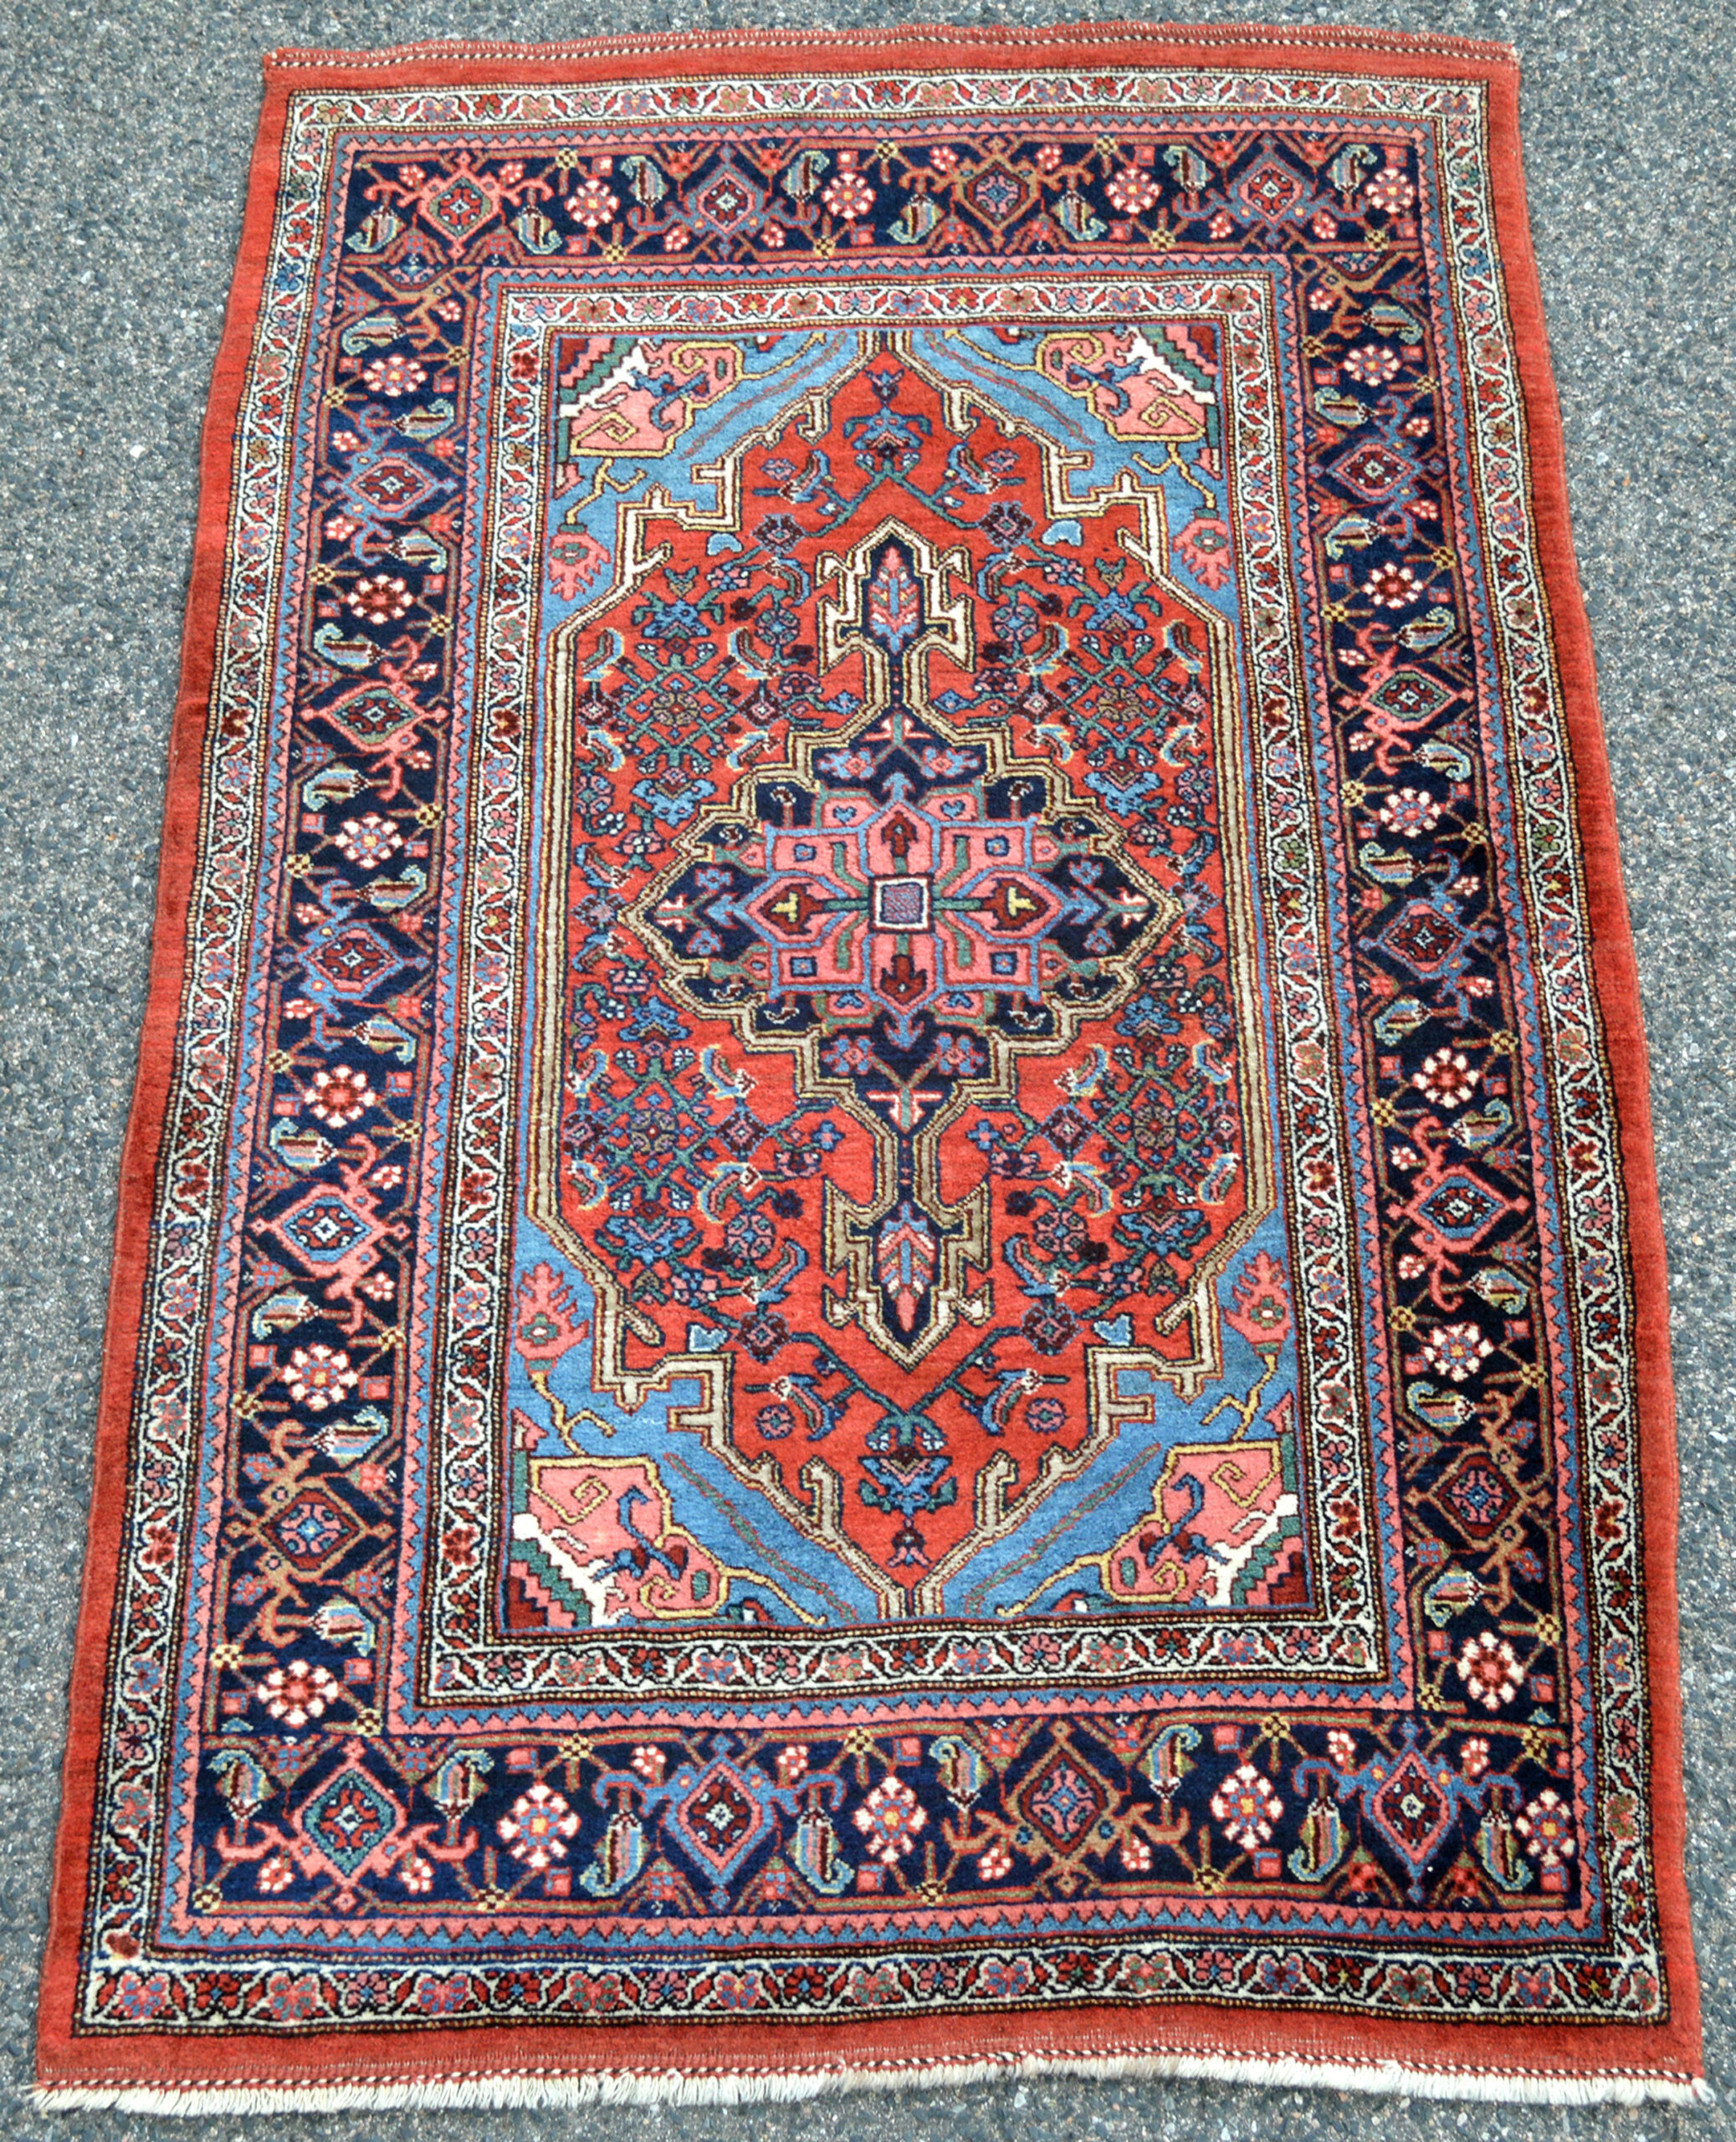 Antique Persian Bidjar rug of the Gogargin type, circa 1915, Douglas Stock Gallery, South Natick,Ma, Boston area antique Oriental rugs